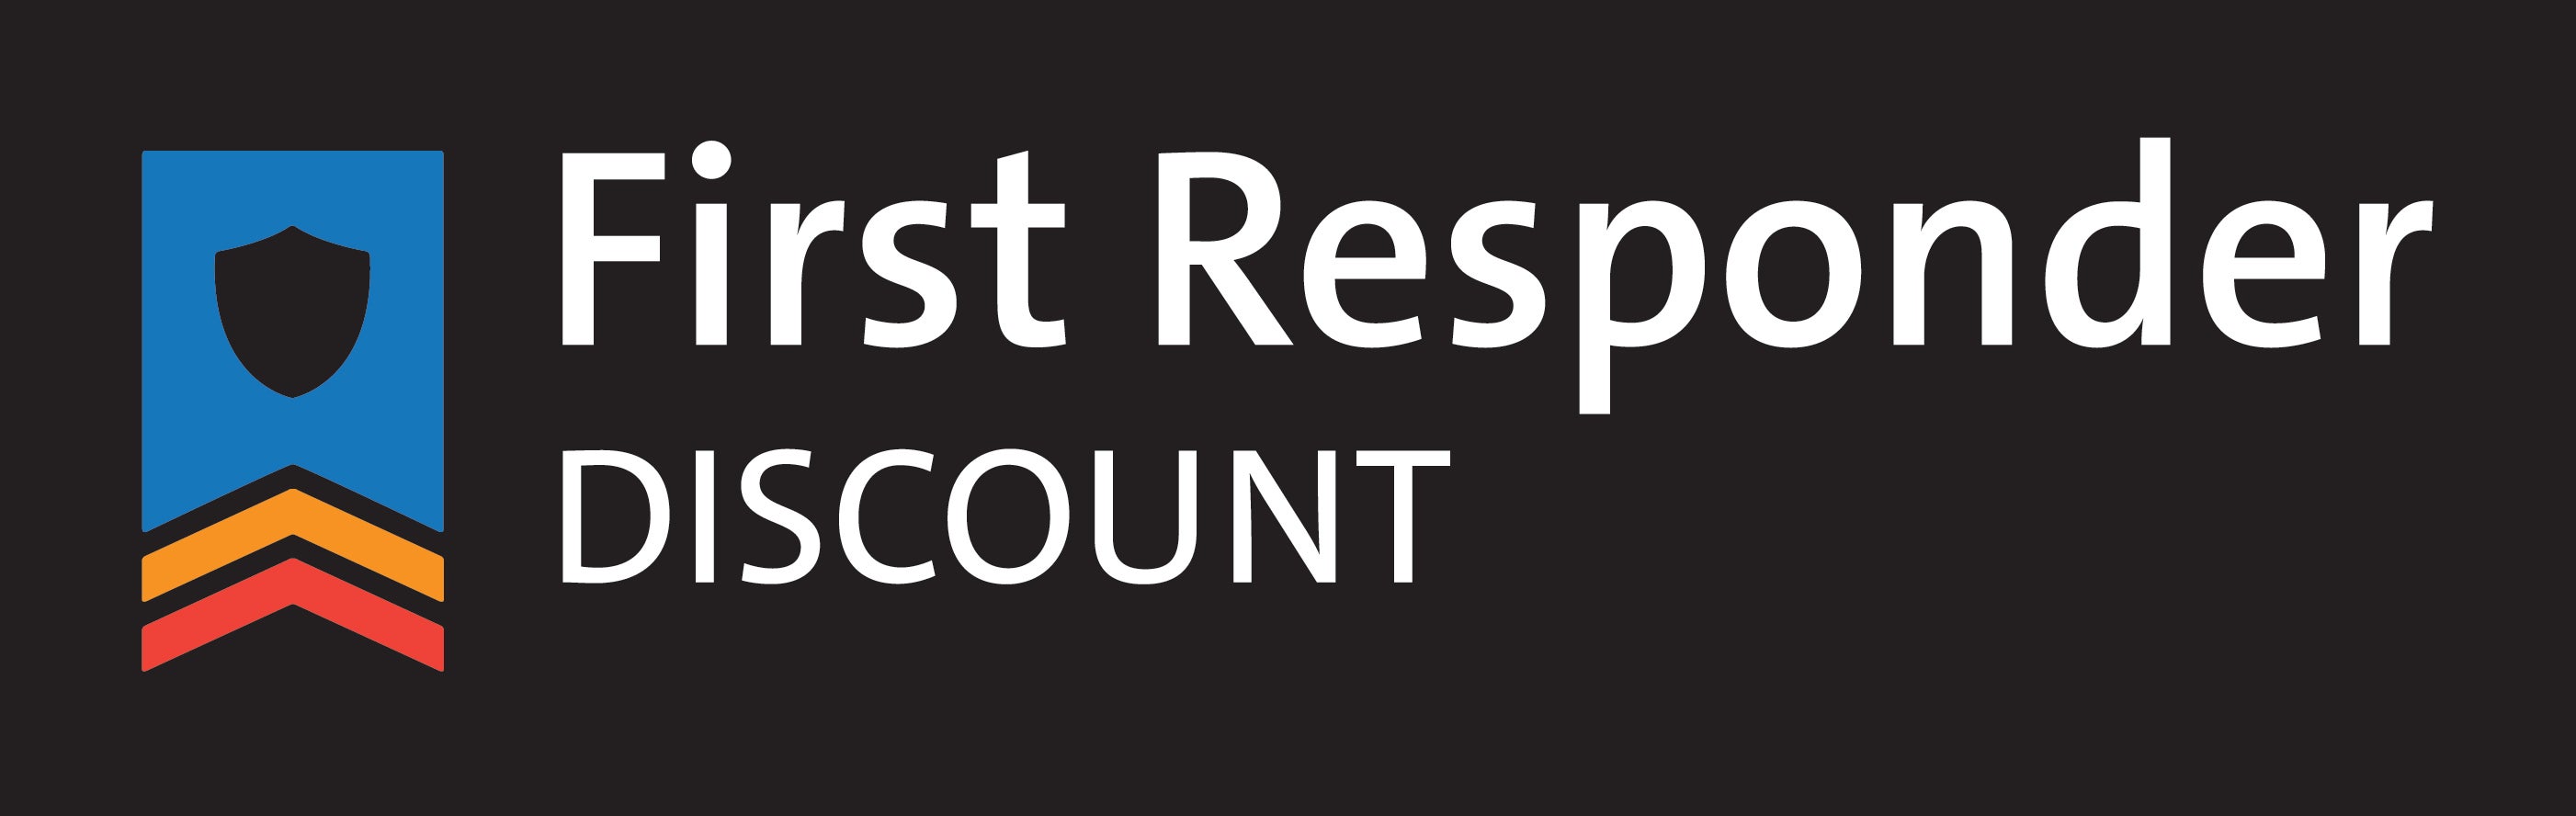 First Responder Discount